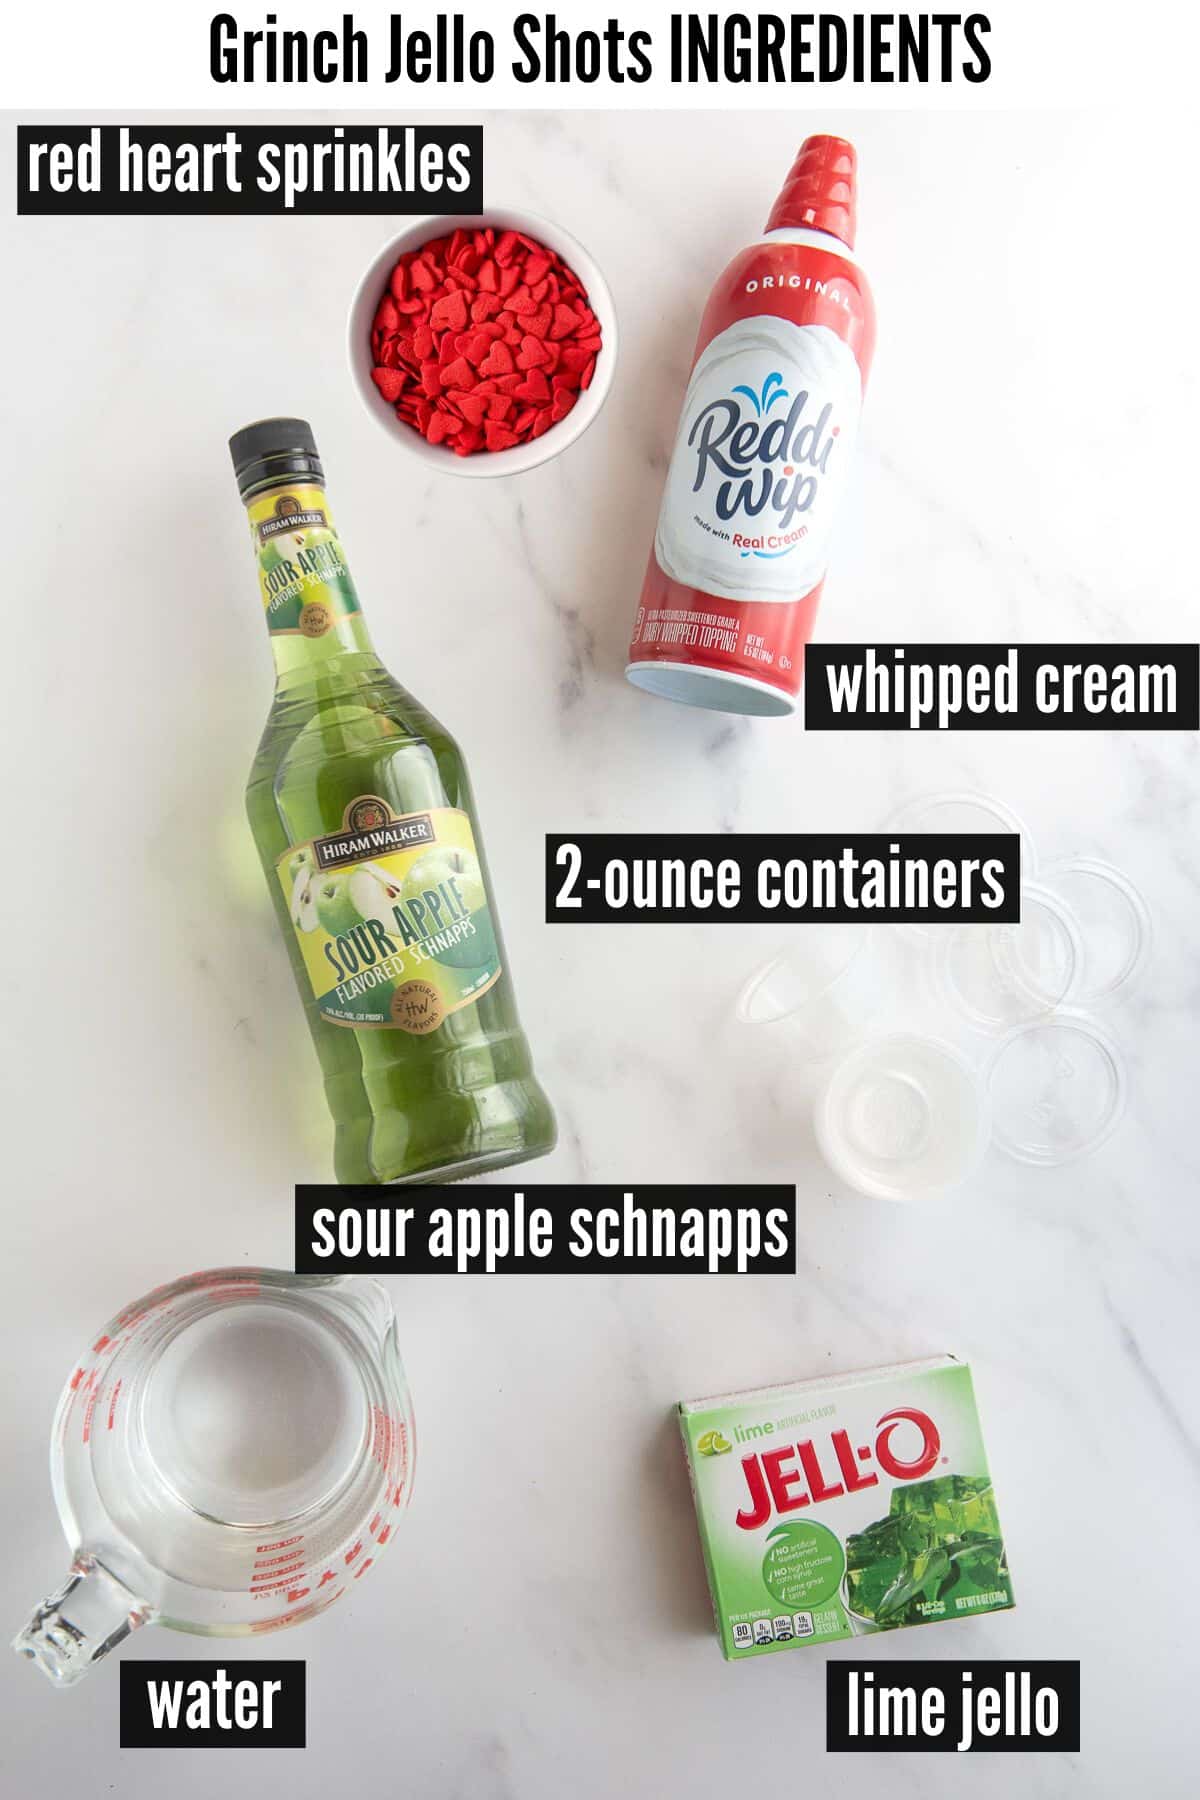 grinch jello shots labelled ingredients.